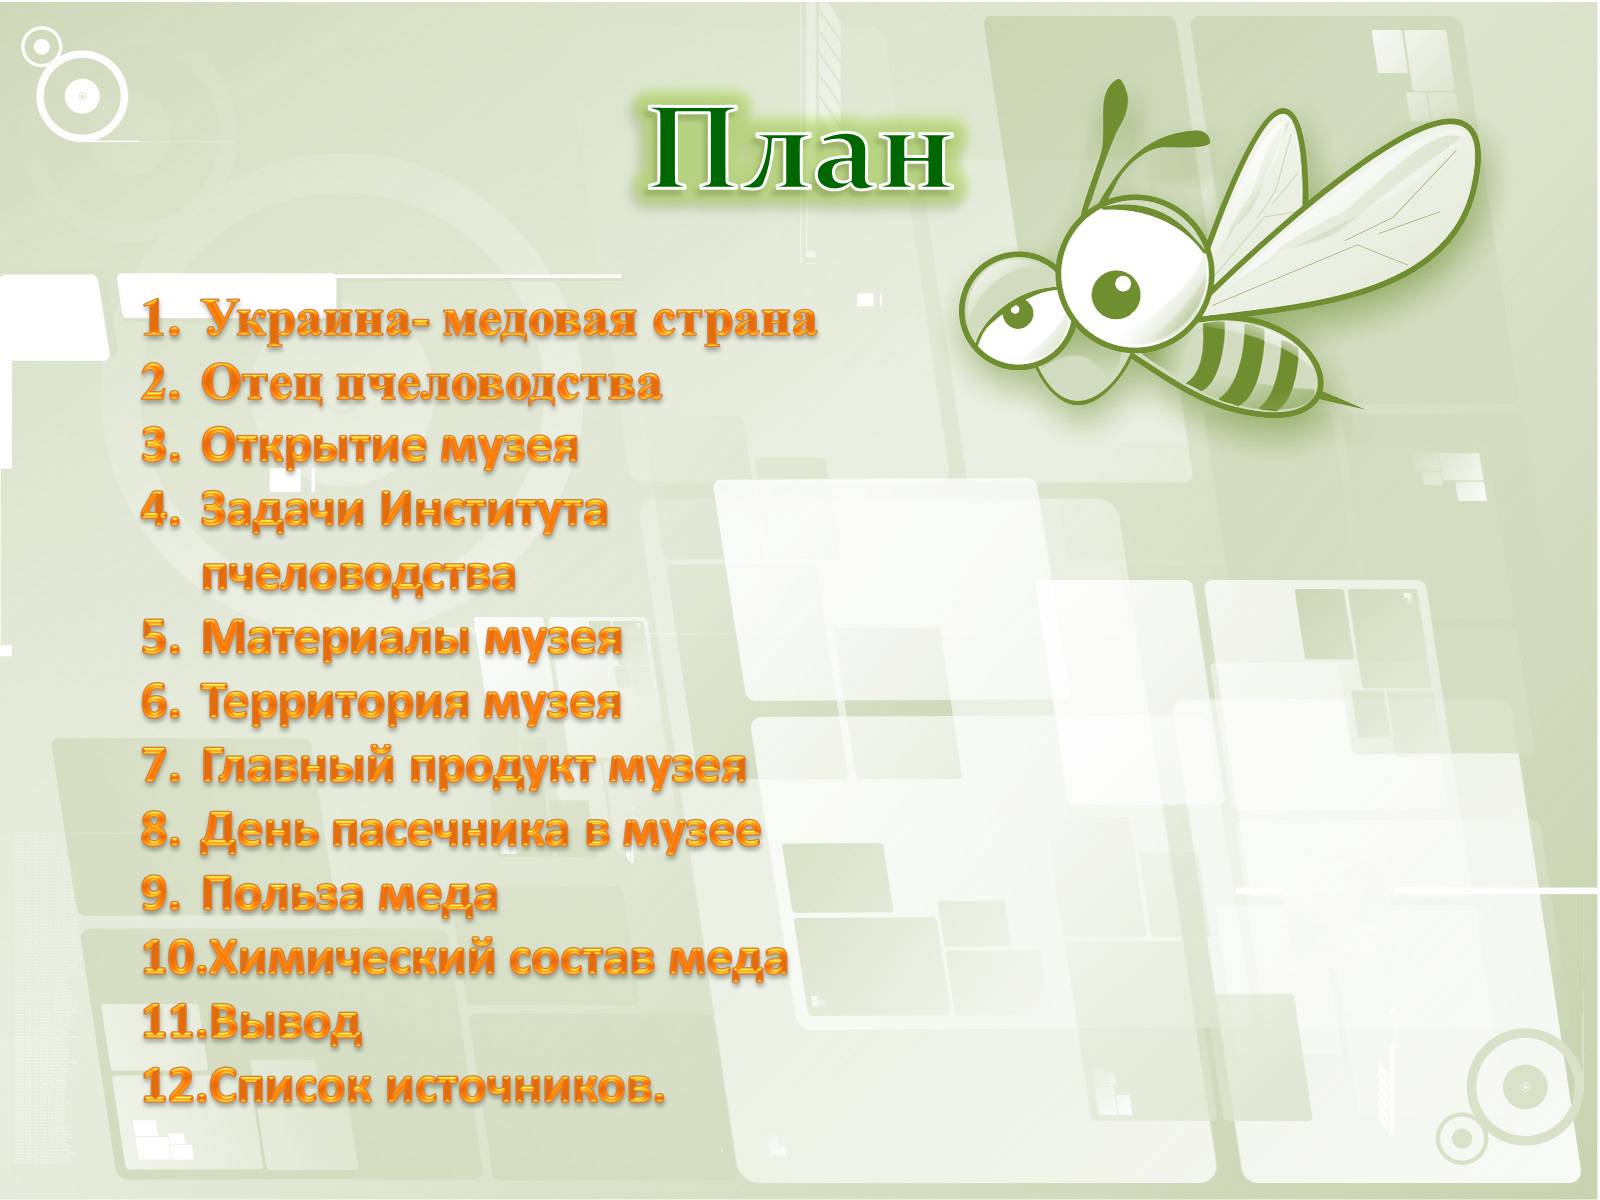 Презентація на тему «Национальный музей пчеловодства Украины» - Слайд #3